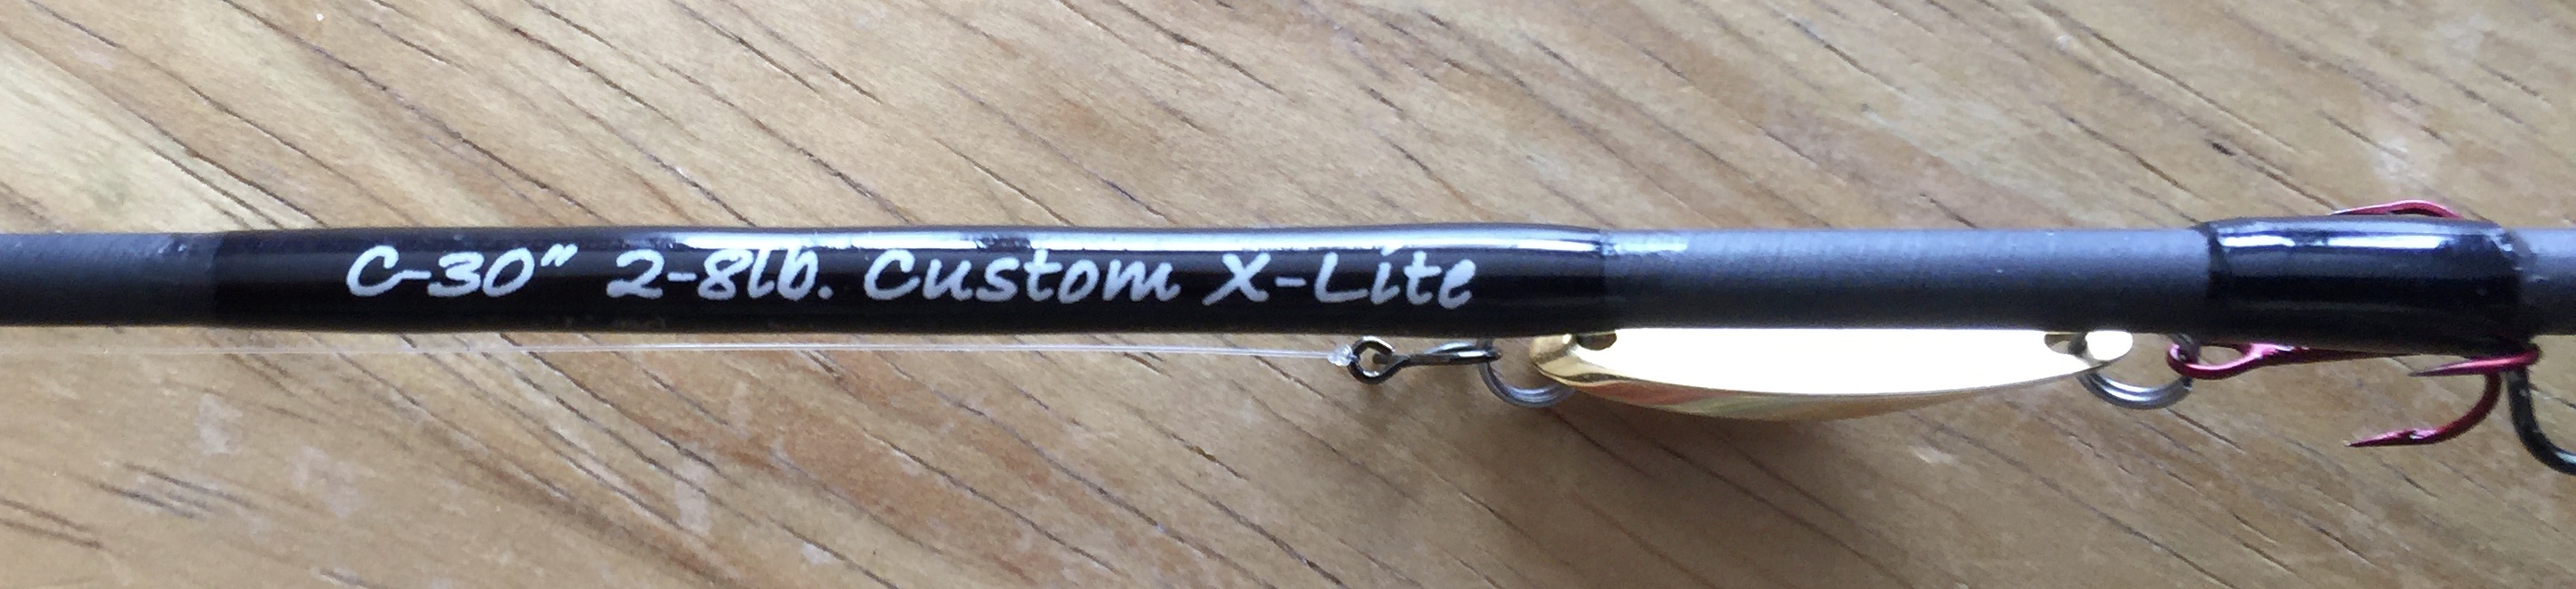 XLite Custom Ice Fishing Rod Classified Ads InDepth